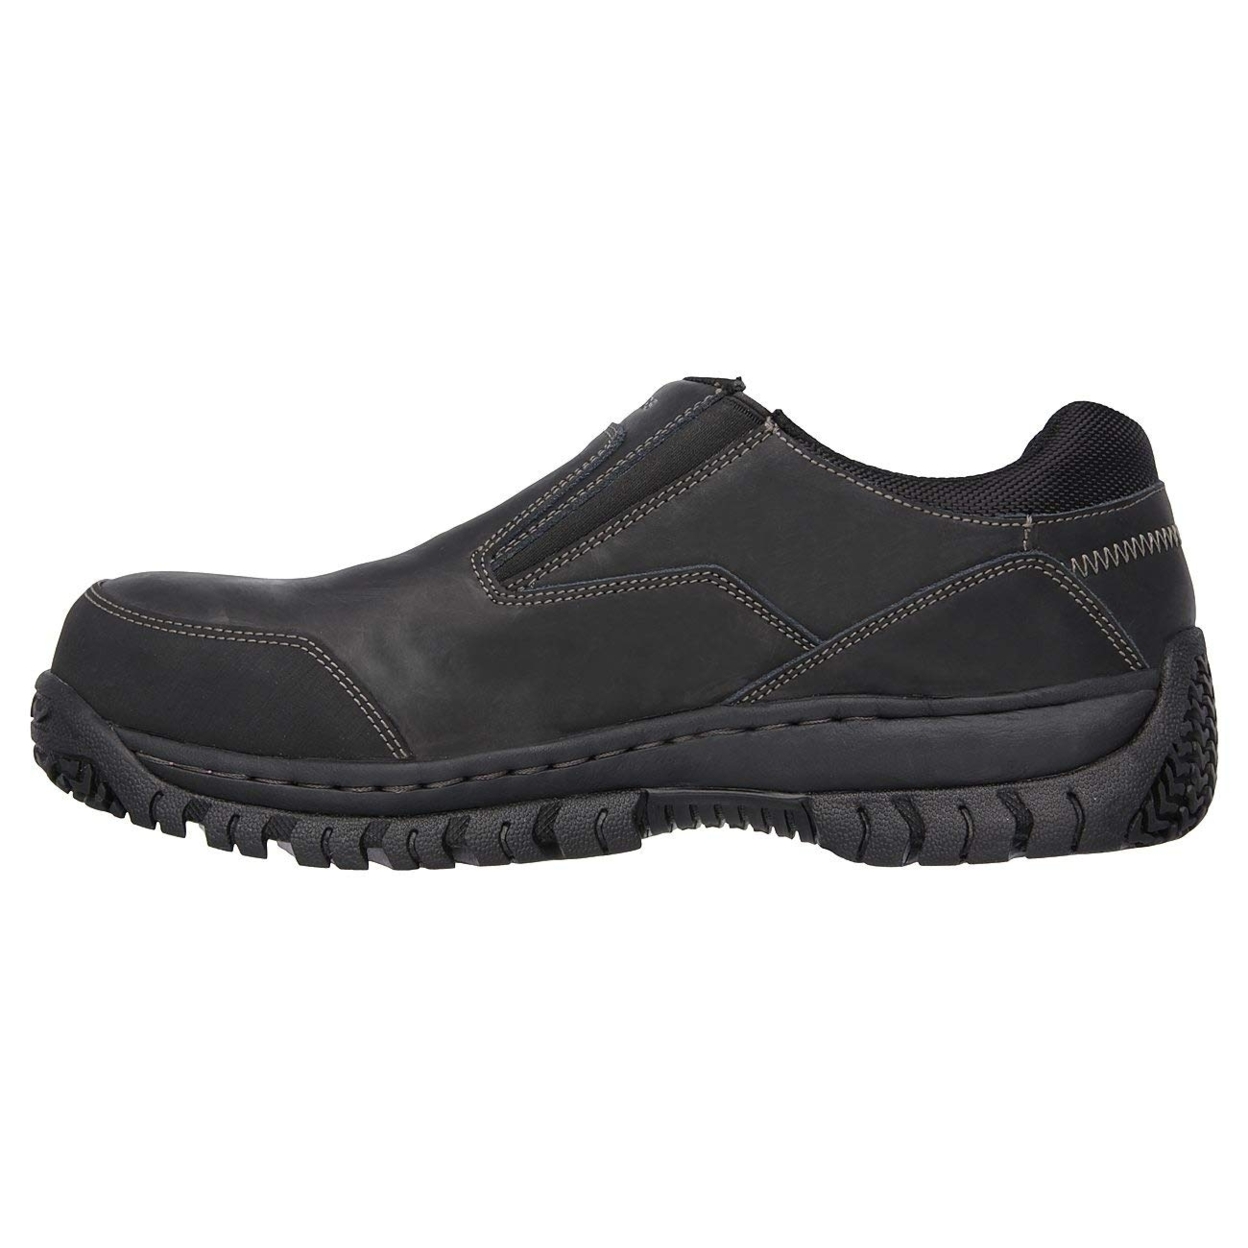 Skechers For Work Men's Hartan Steel Toe Slip-On Shoe Varies BLACK - BLACK, 10.5